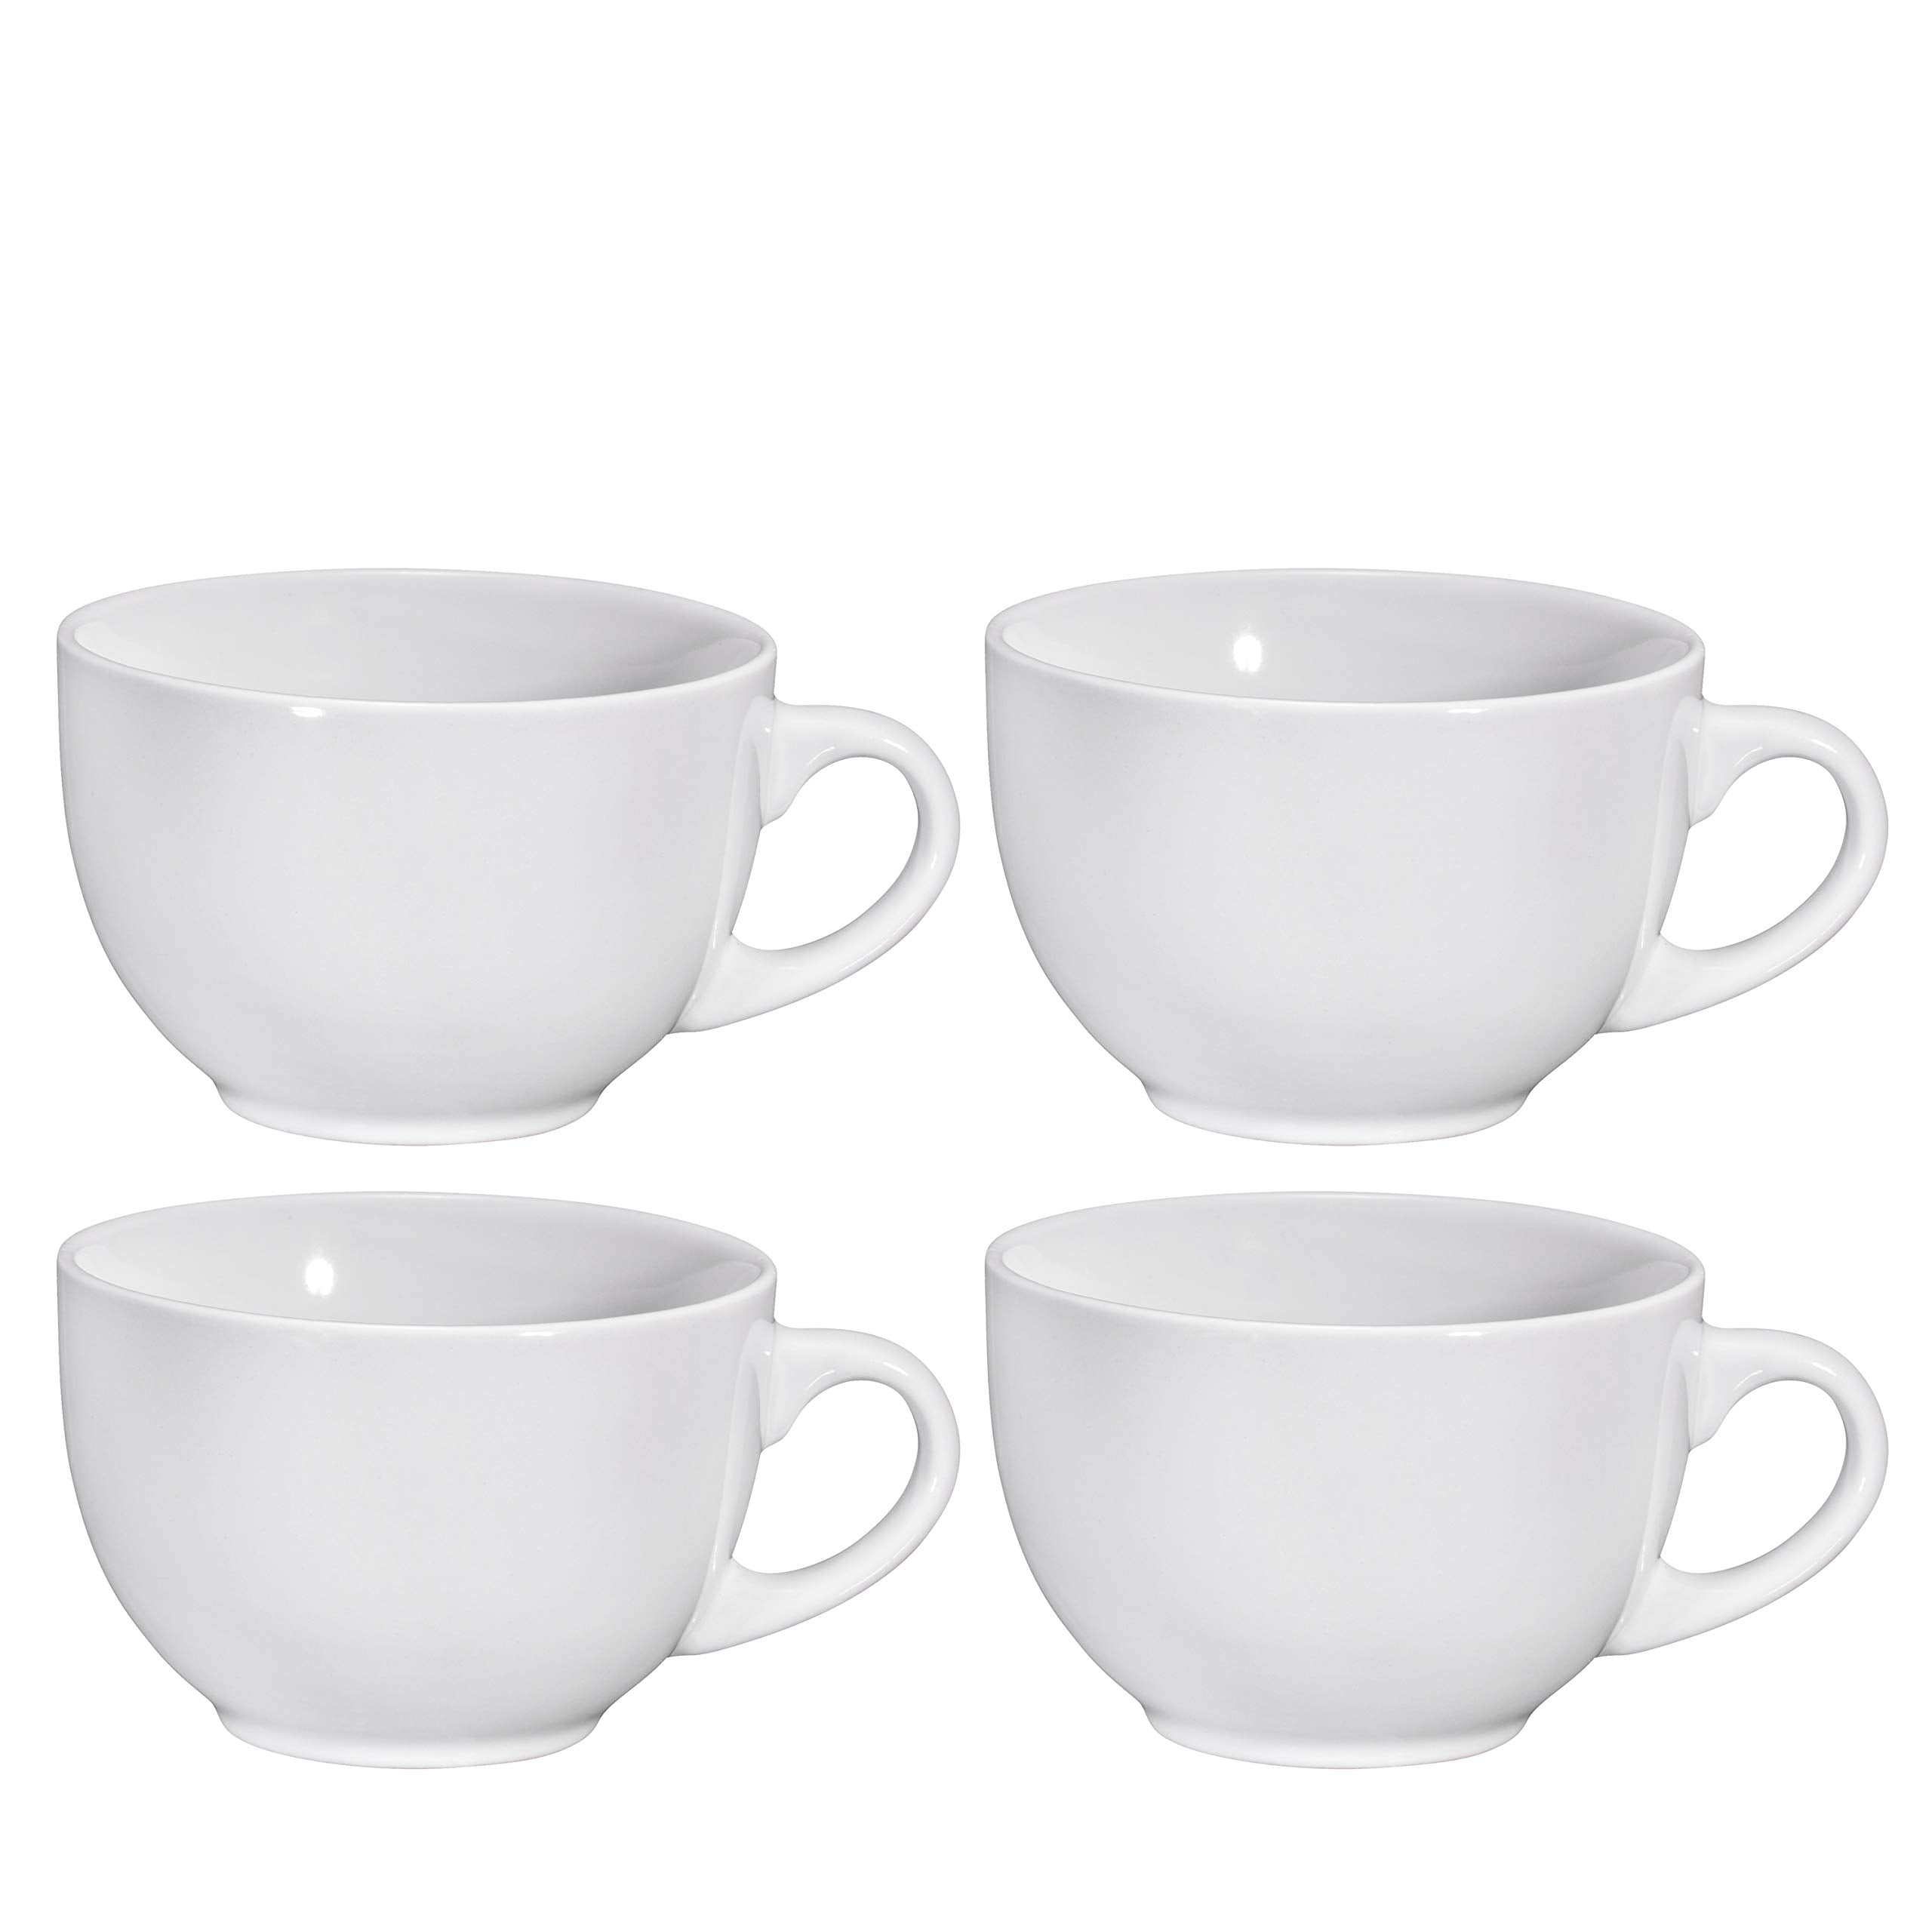 Bruntmor Porcelain 24 Oz White Large Coffee Mug Set - Big Handle Mugs for  Cereal, Tea, Soup - Microwavable and Easy to Handle - Ideal for DIY